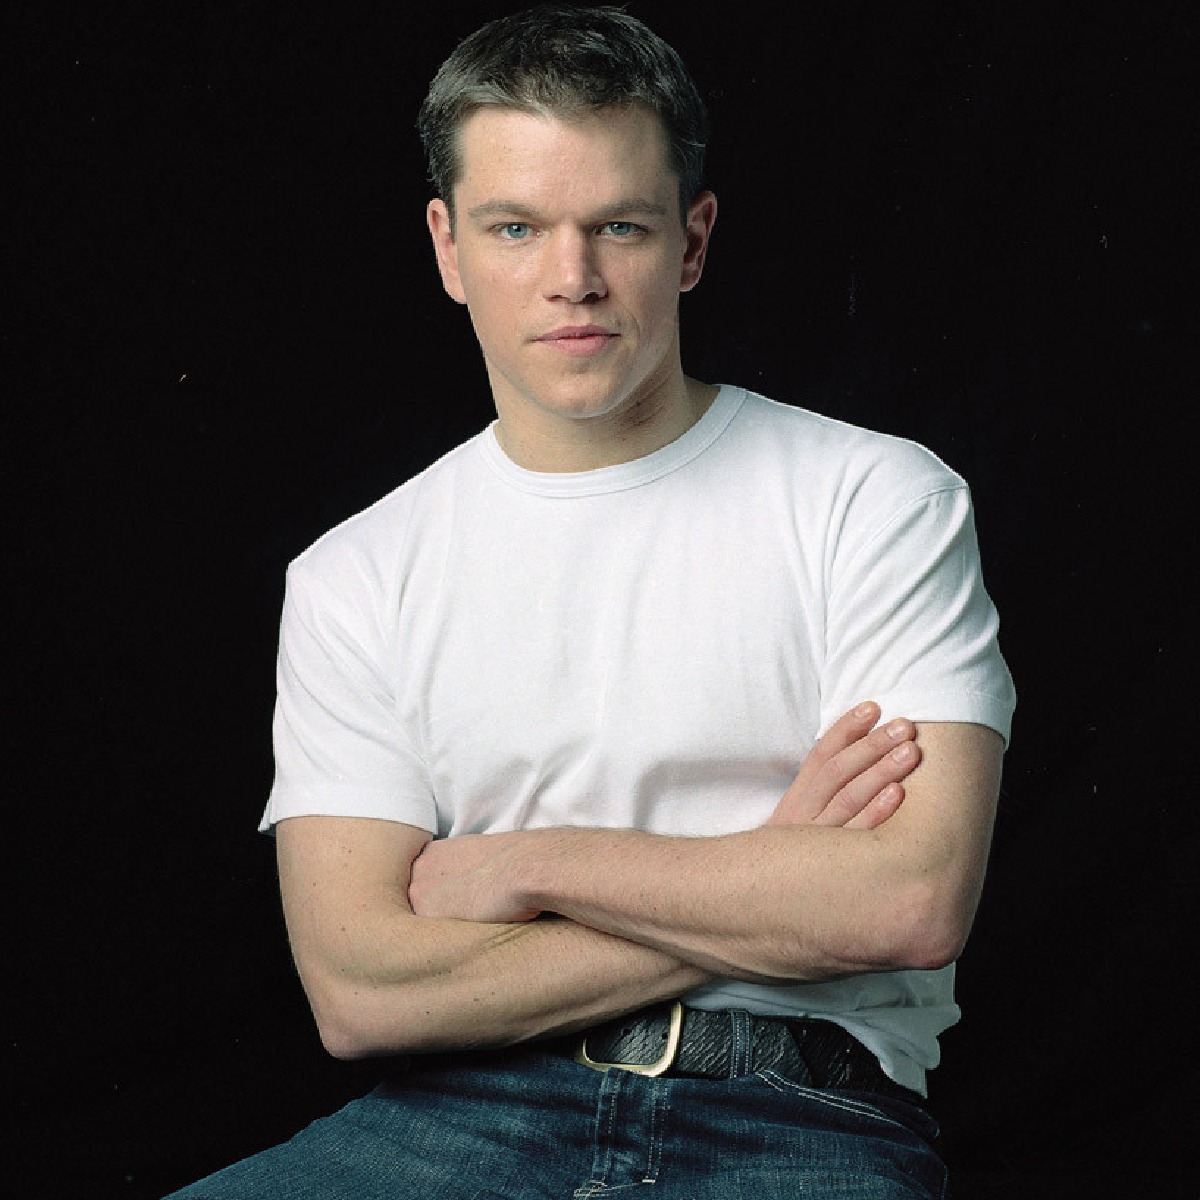 Matt Damon in the studio